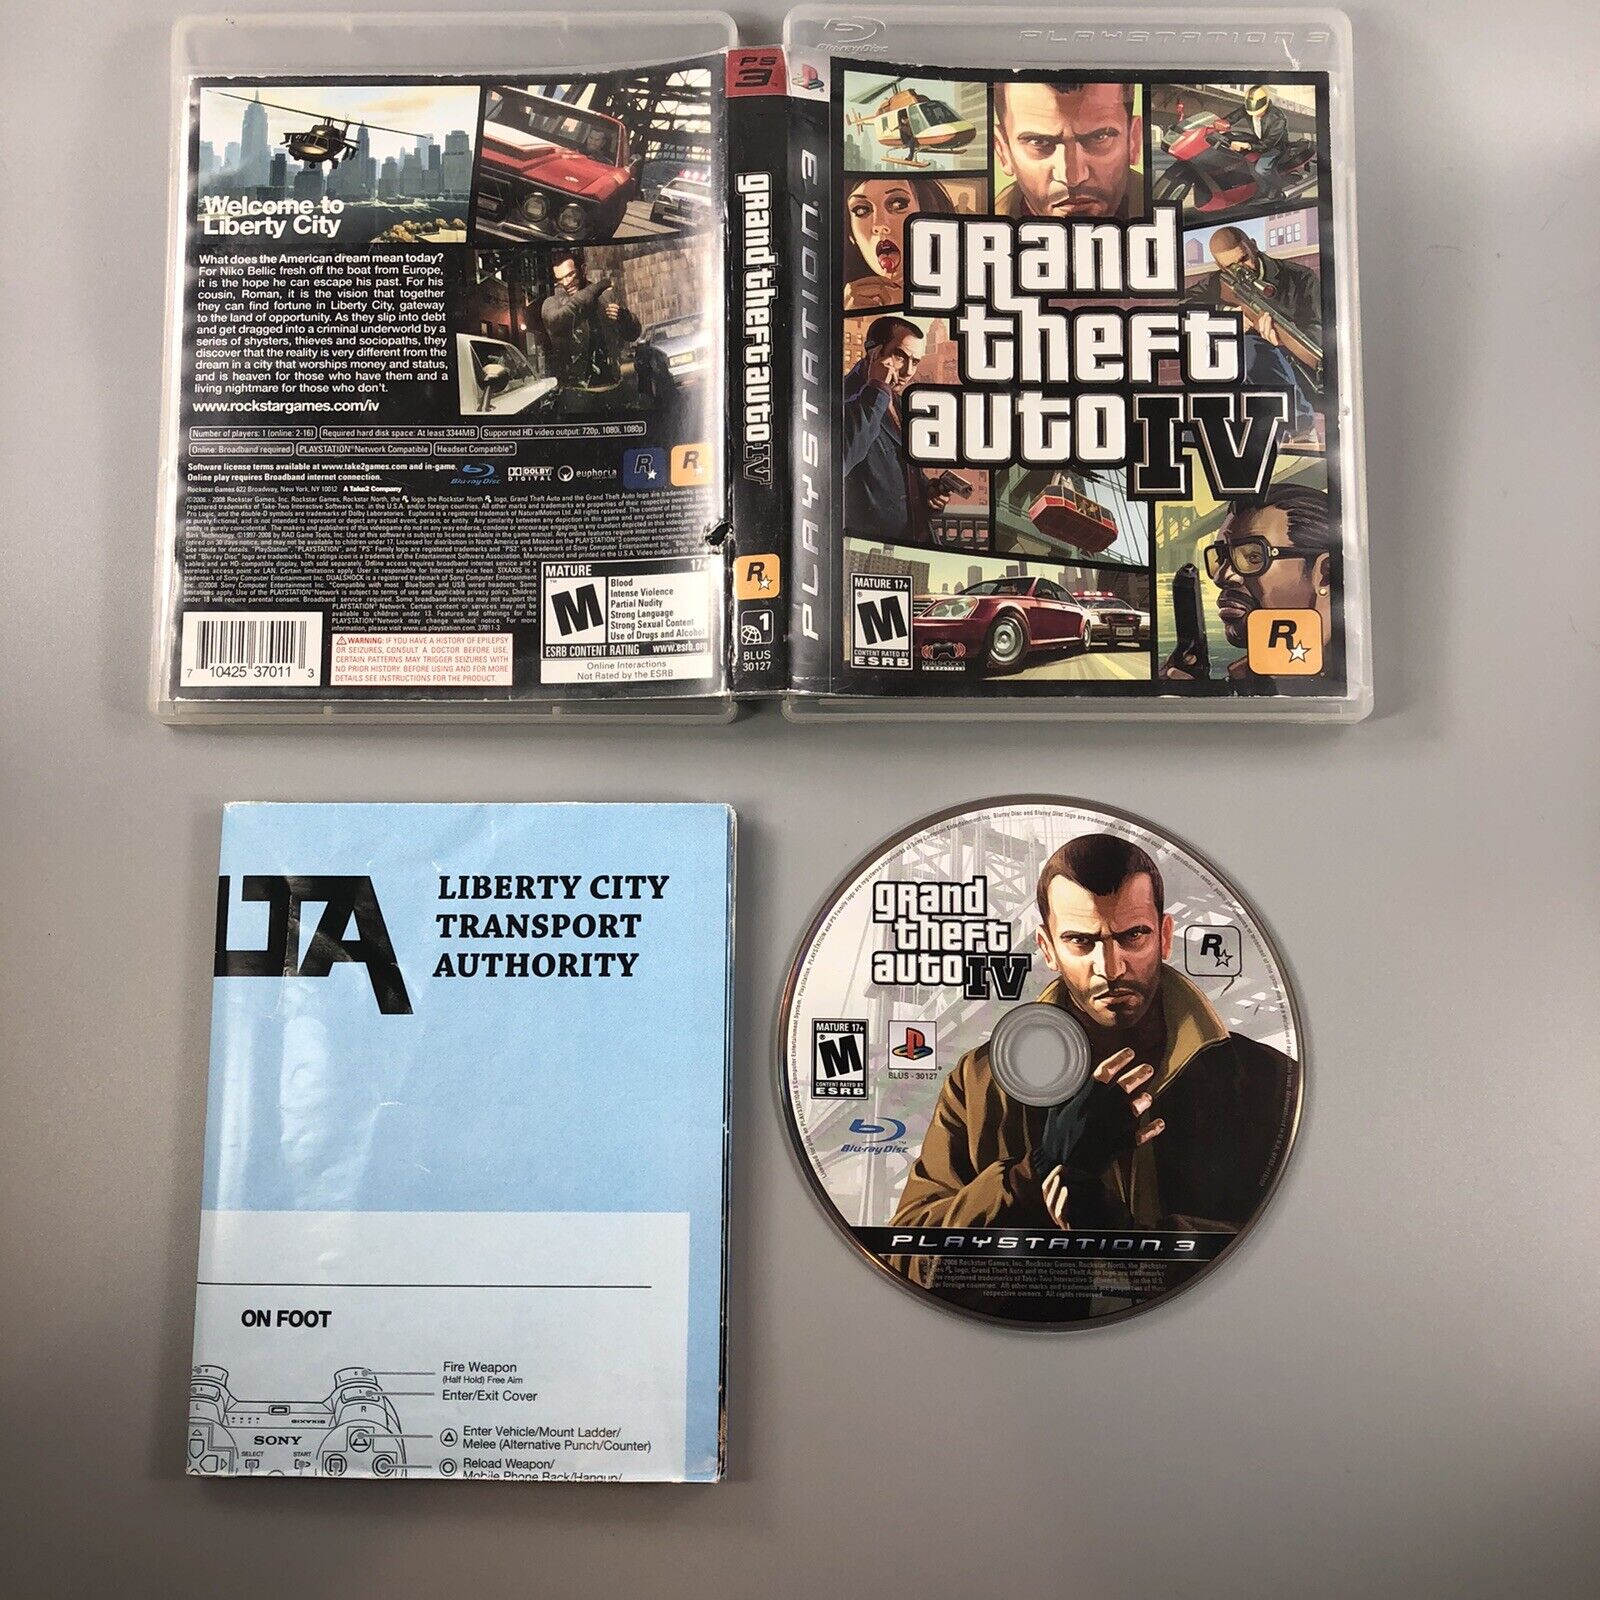 Grand Theft Auto IV - PS3 GTA 4 Map, No Manual PlayStation 3 - TESTED 710425370113 | eBay